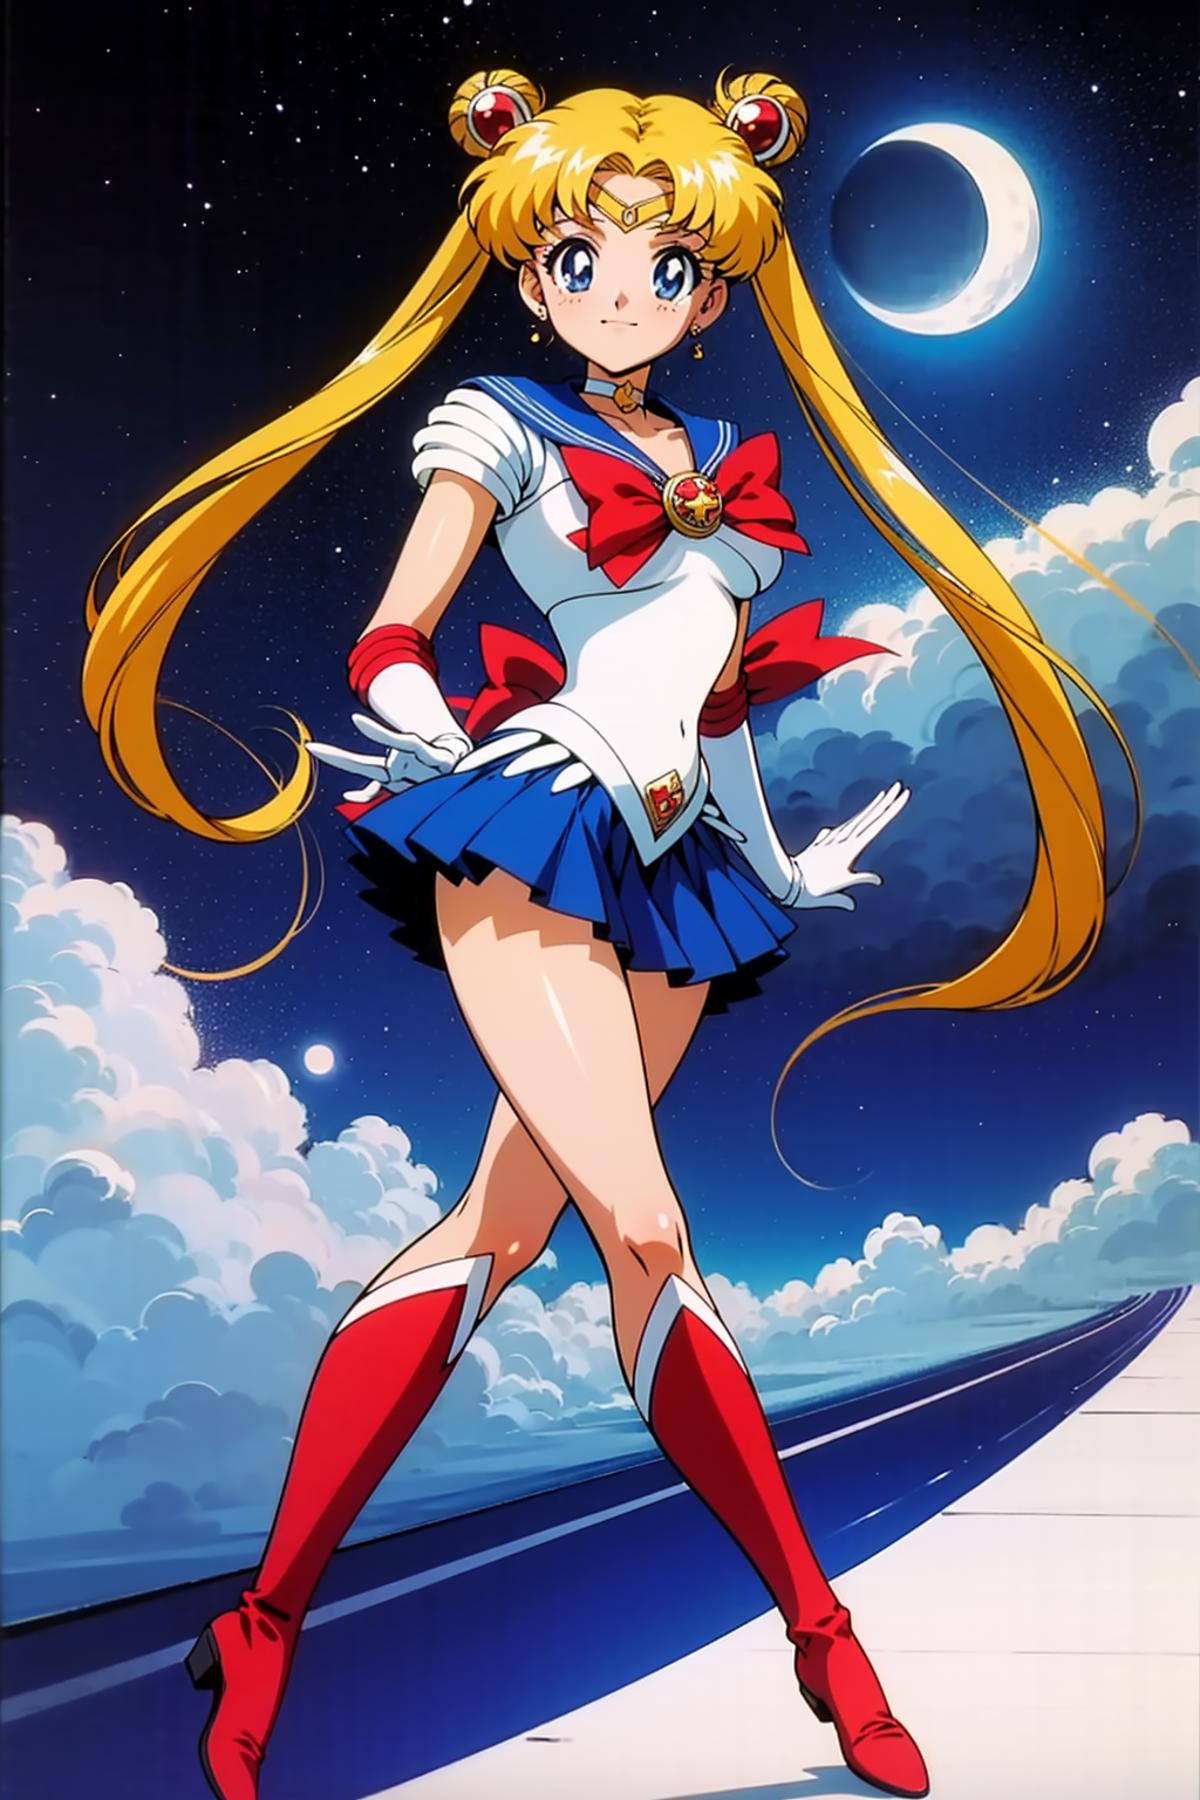 Sailor Moon / Usagi Tsukino (Sailor Moon) - Lora image by ElizaPottinger